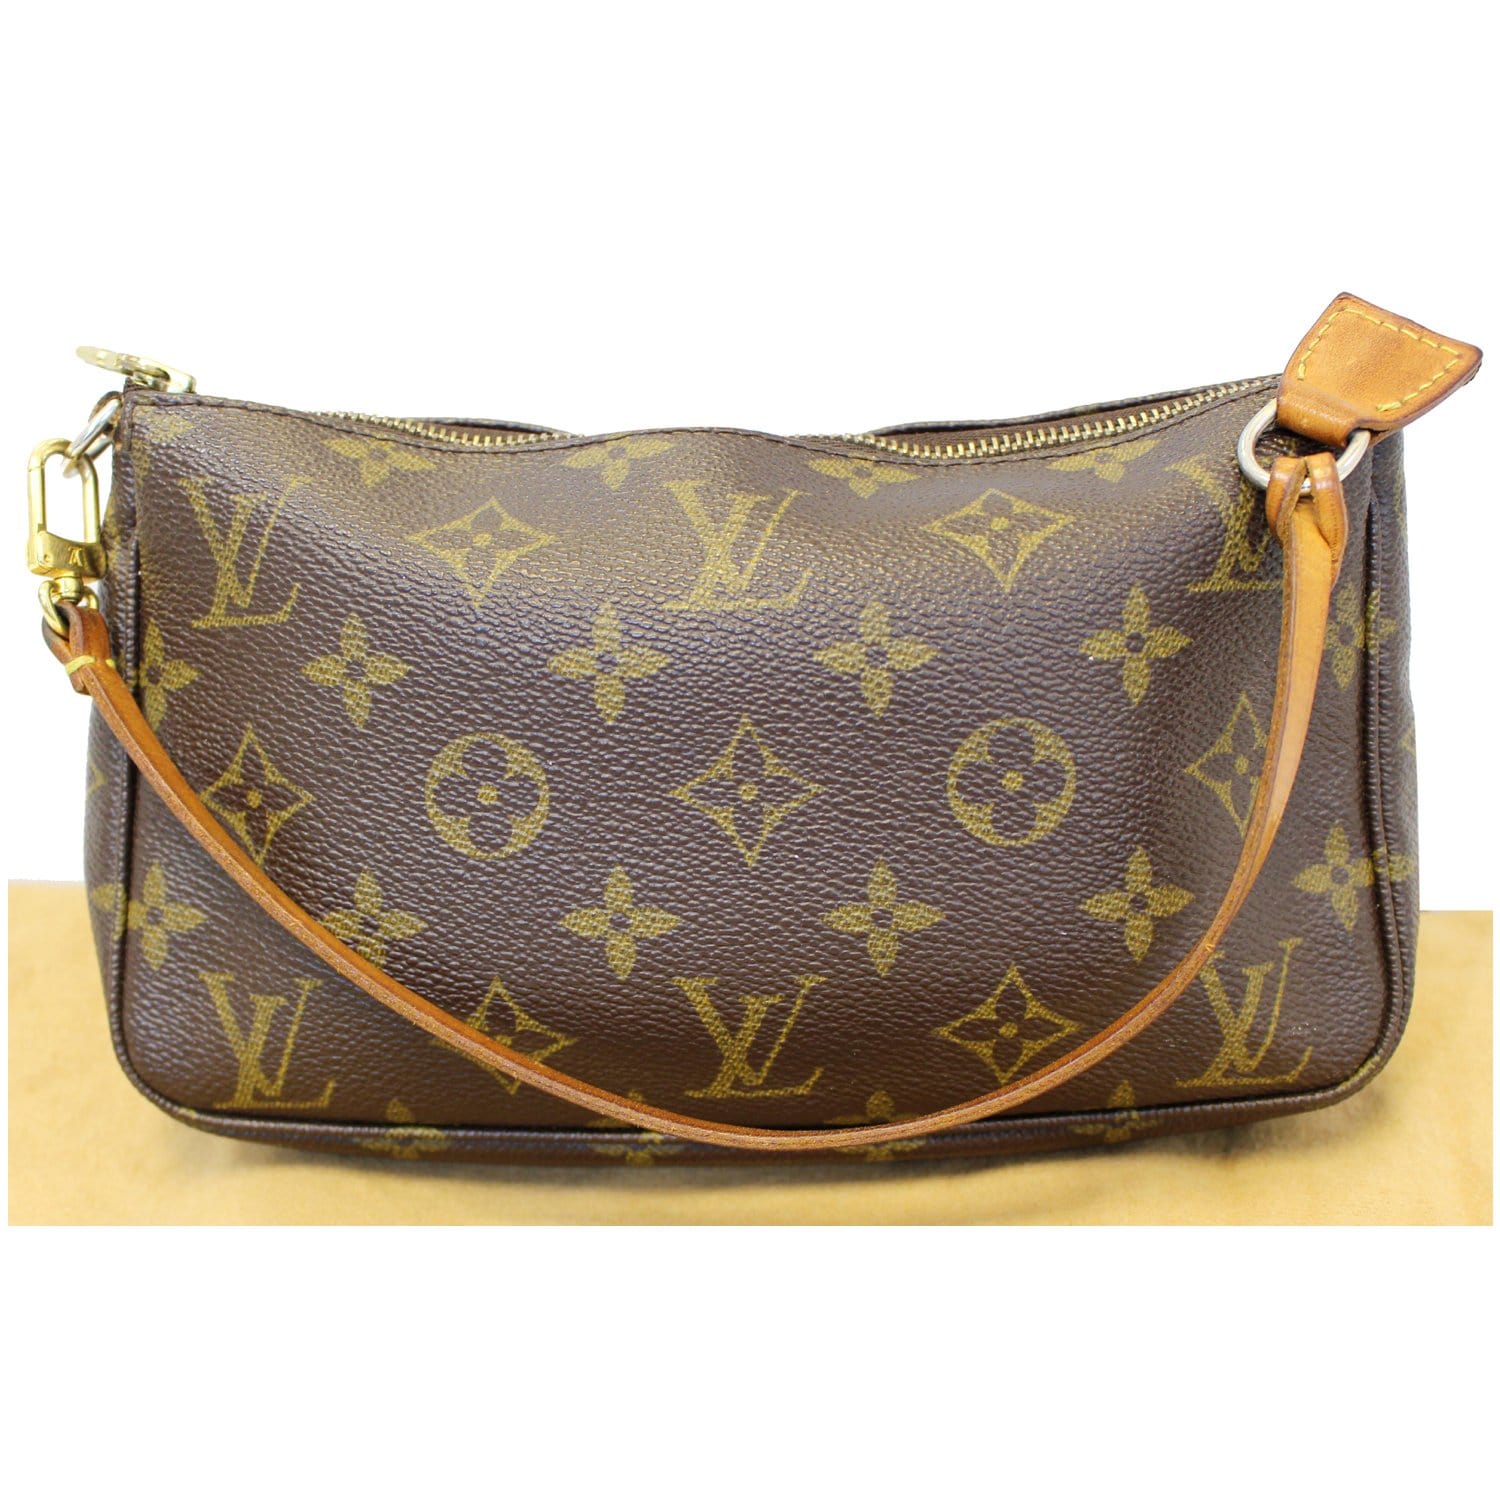 Louis Vuitton Handbag With Scarf Store, SAVE 34% 